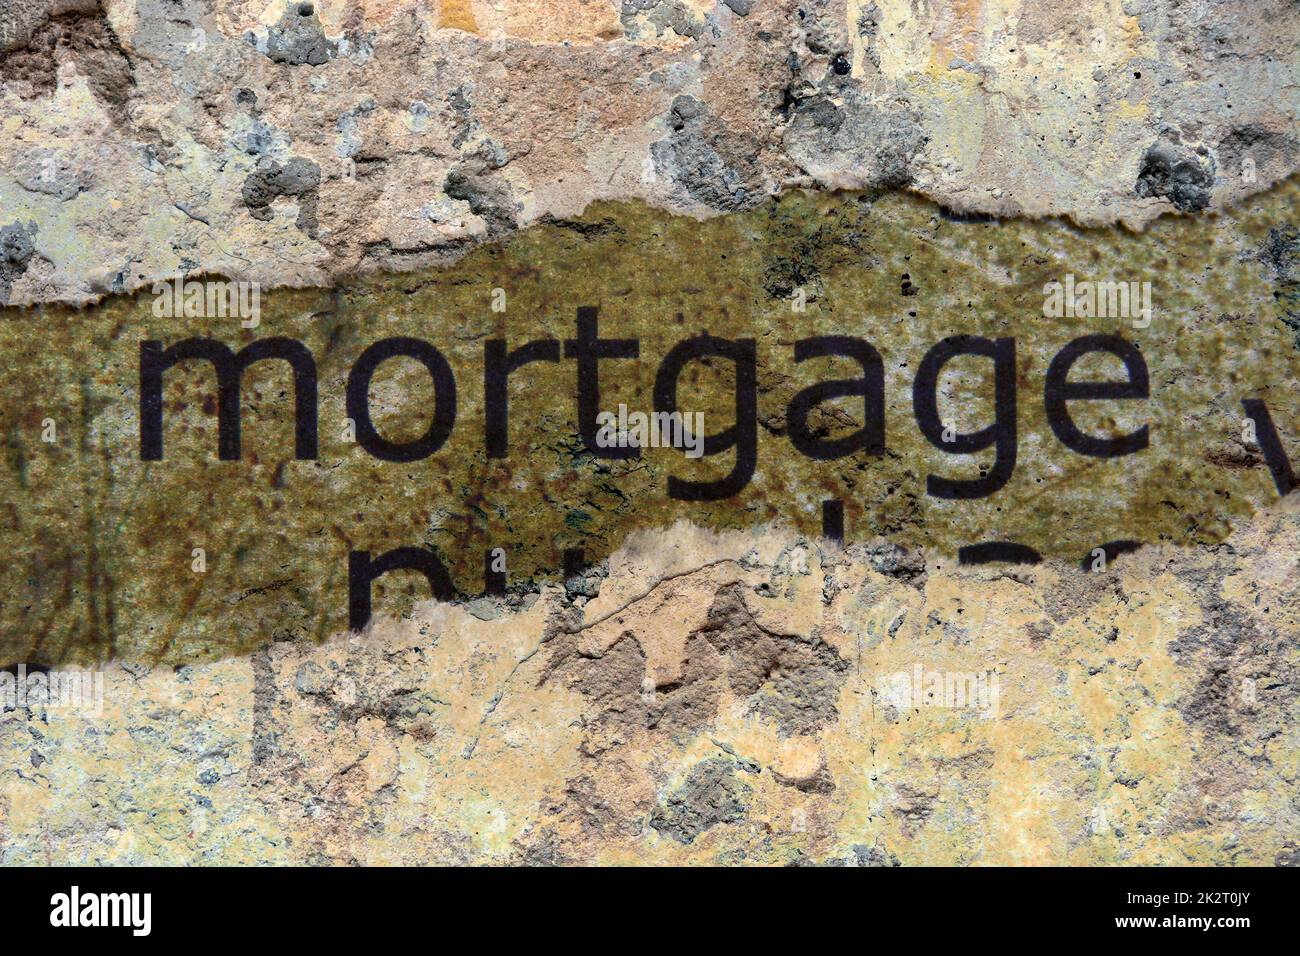 Mortgage concept Stock Photo